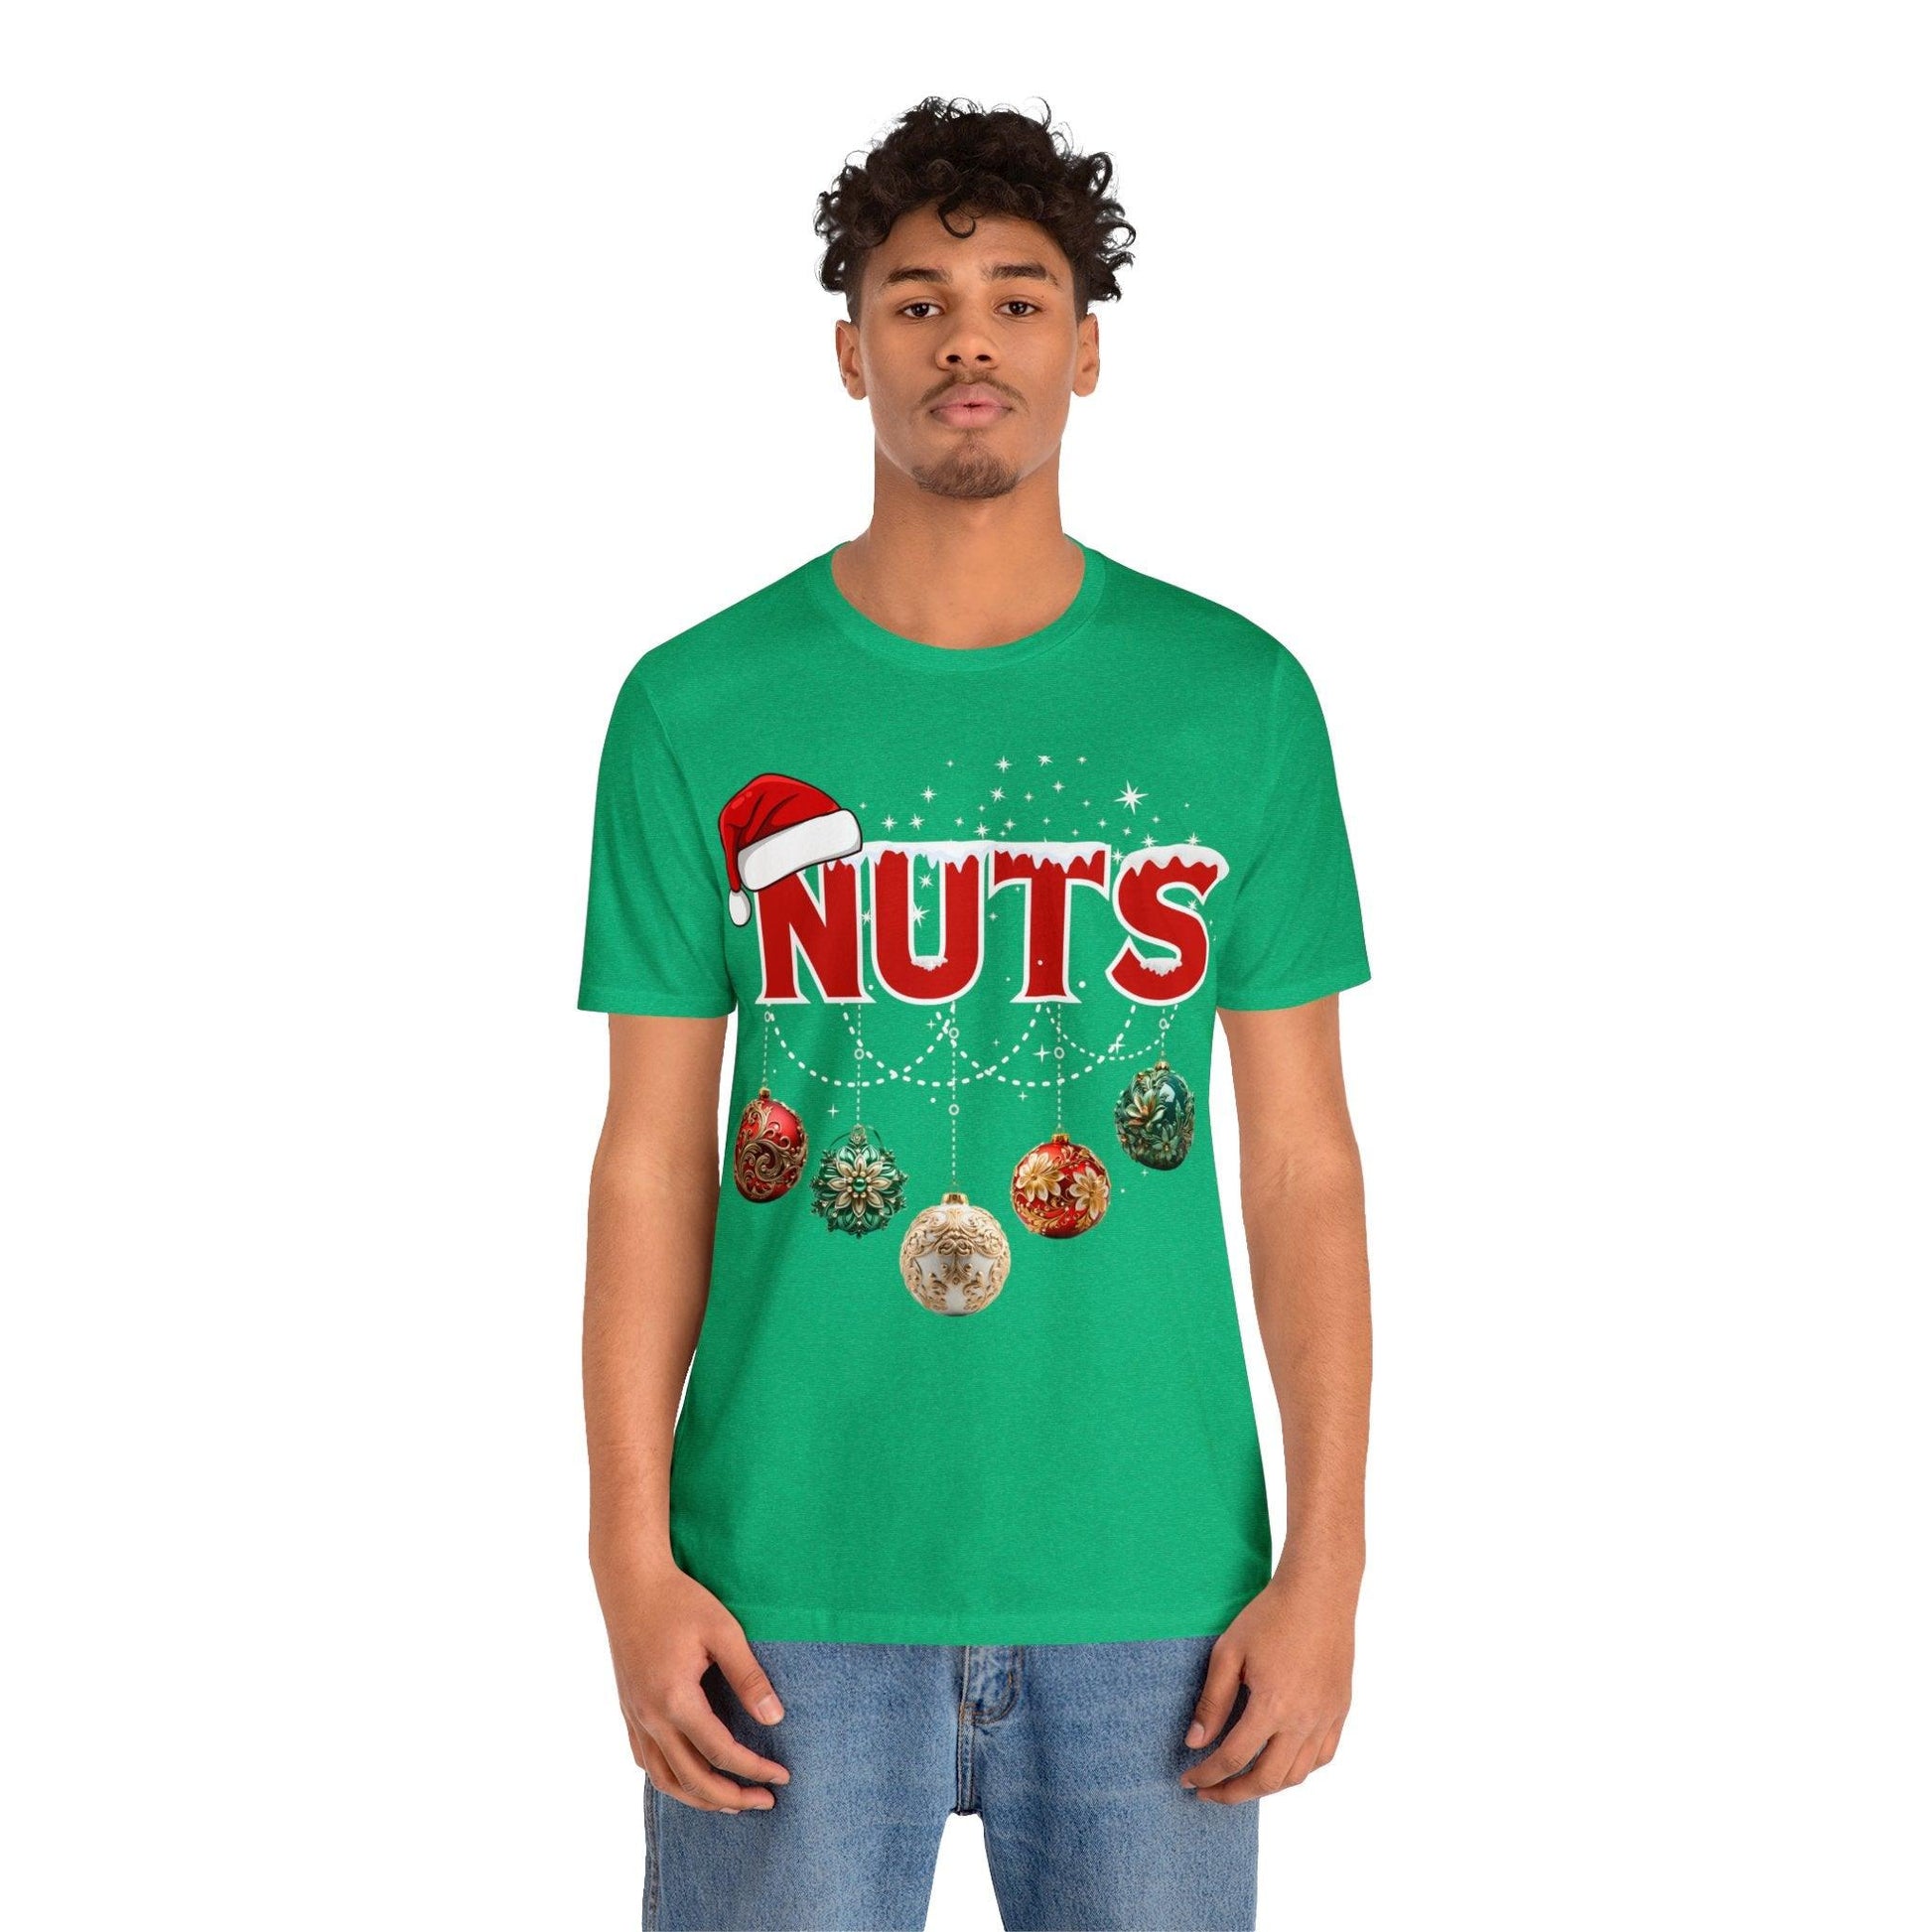 Chest Nuts Shirt Funny Christmas Matching Shirts Couples Matching Shirts Holiday Shirt Cute Christmas Shirt Couple Sweater, Family Tee - Giftsmojo